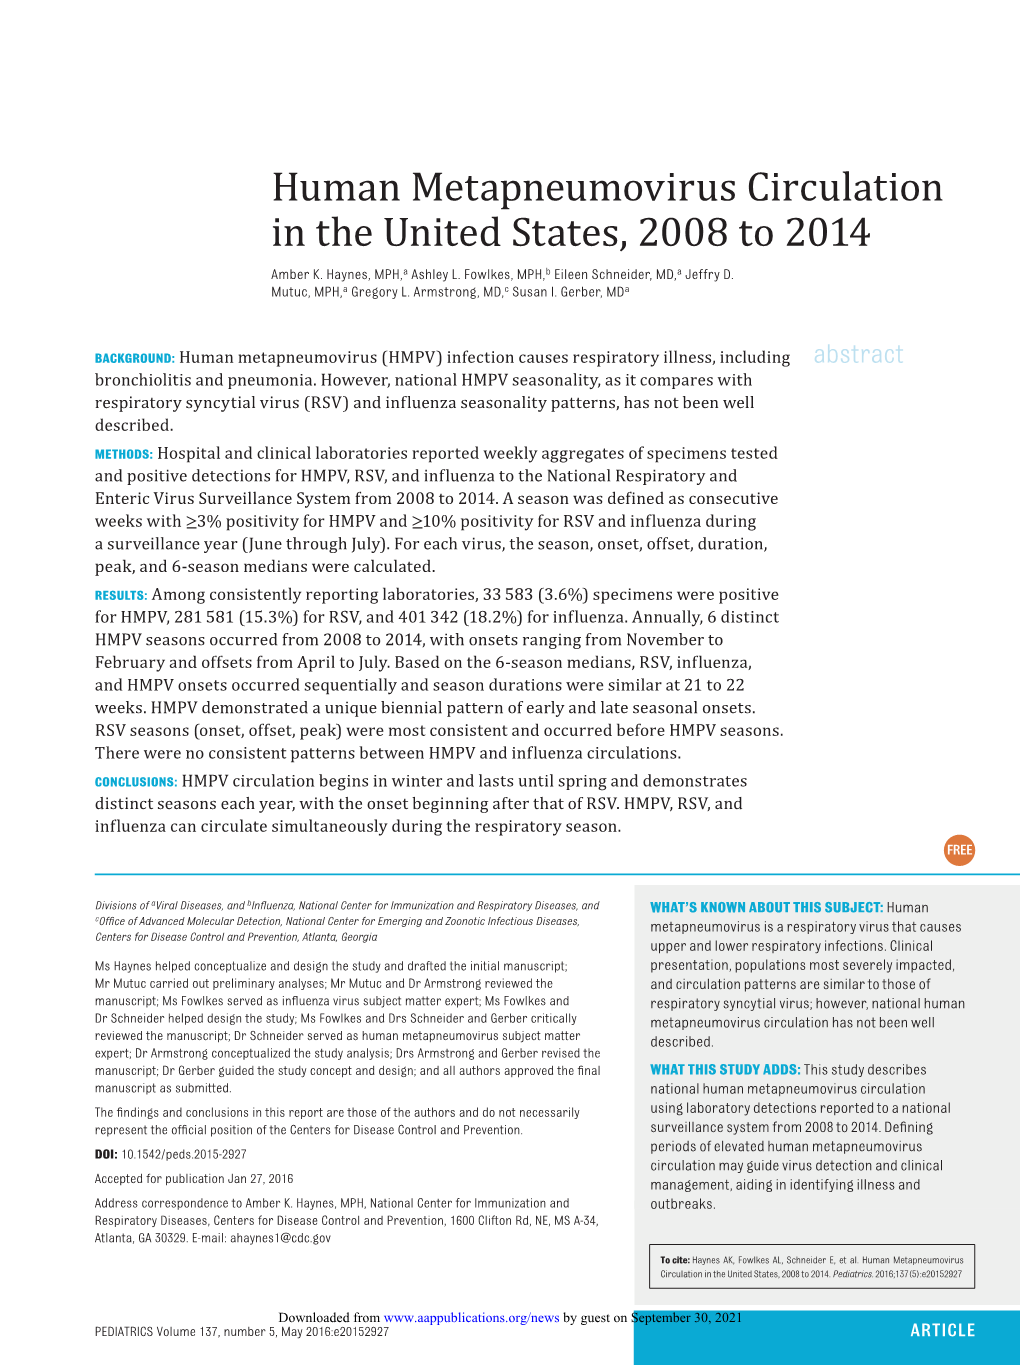 Human Metapneumovirus Circulation in the United States, 2008 to 2014 Amber K